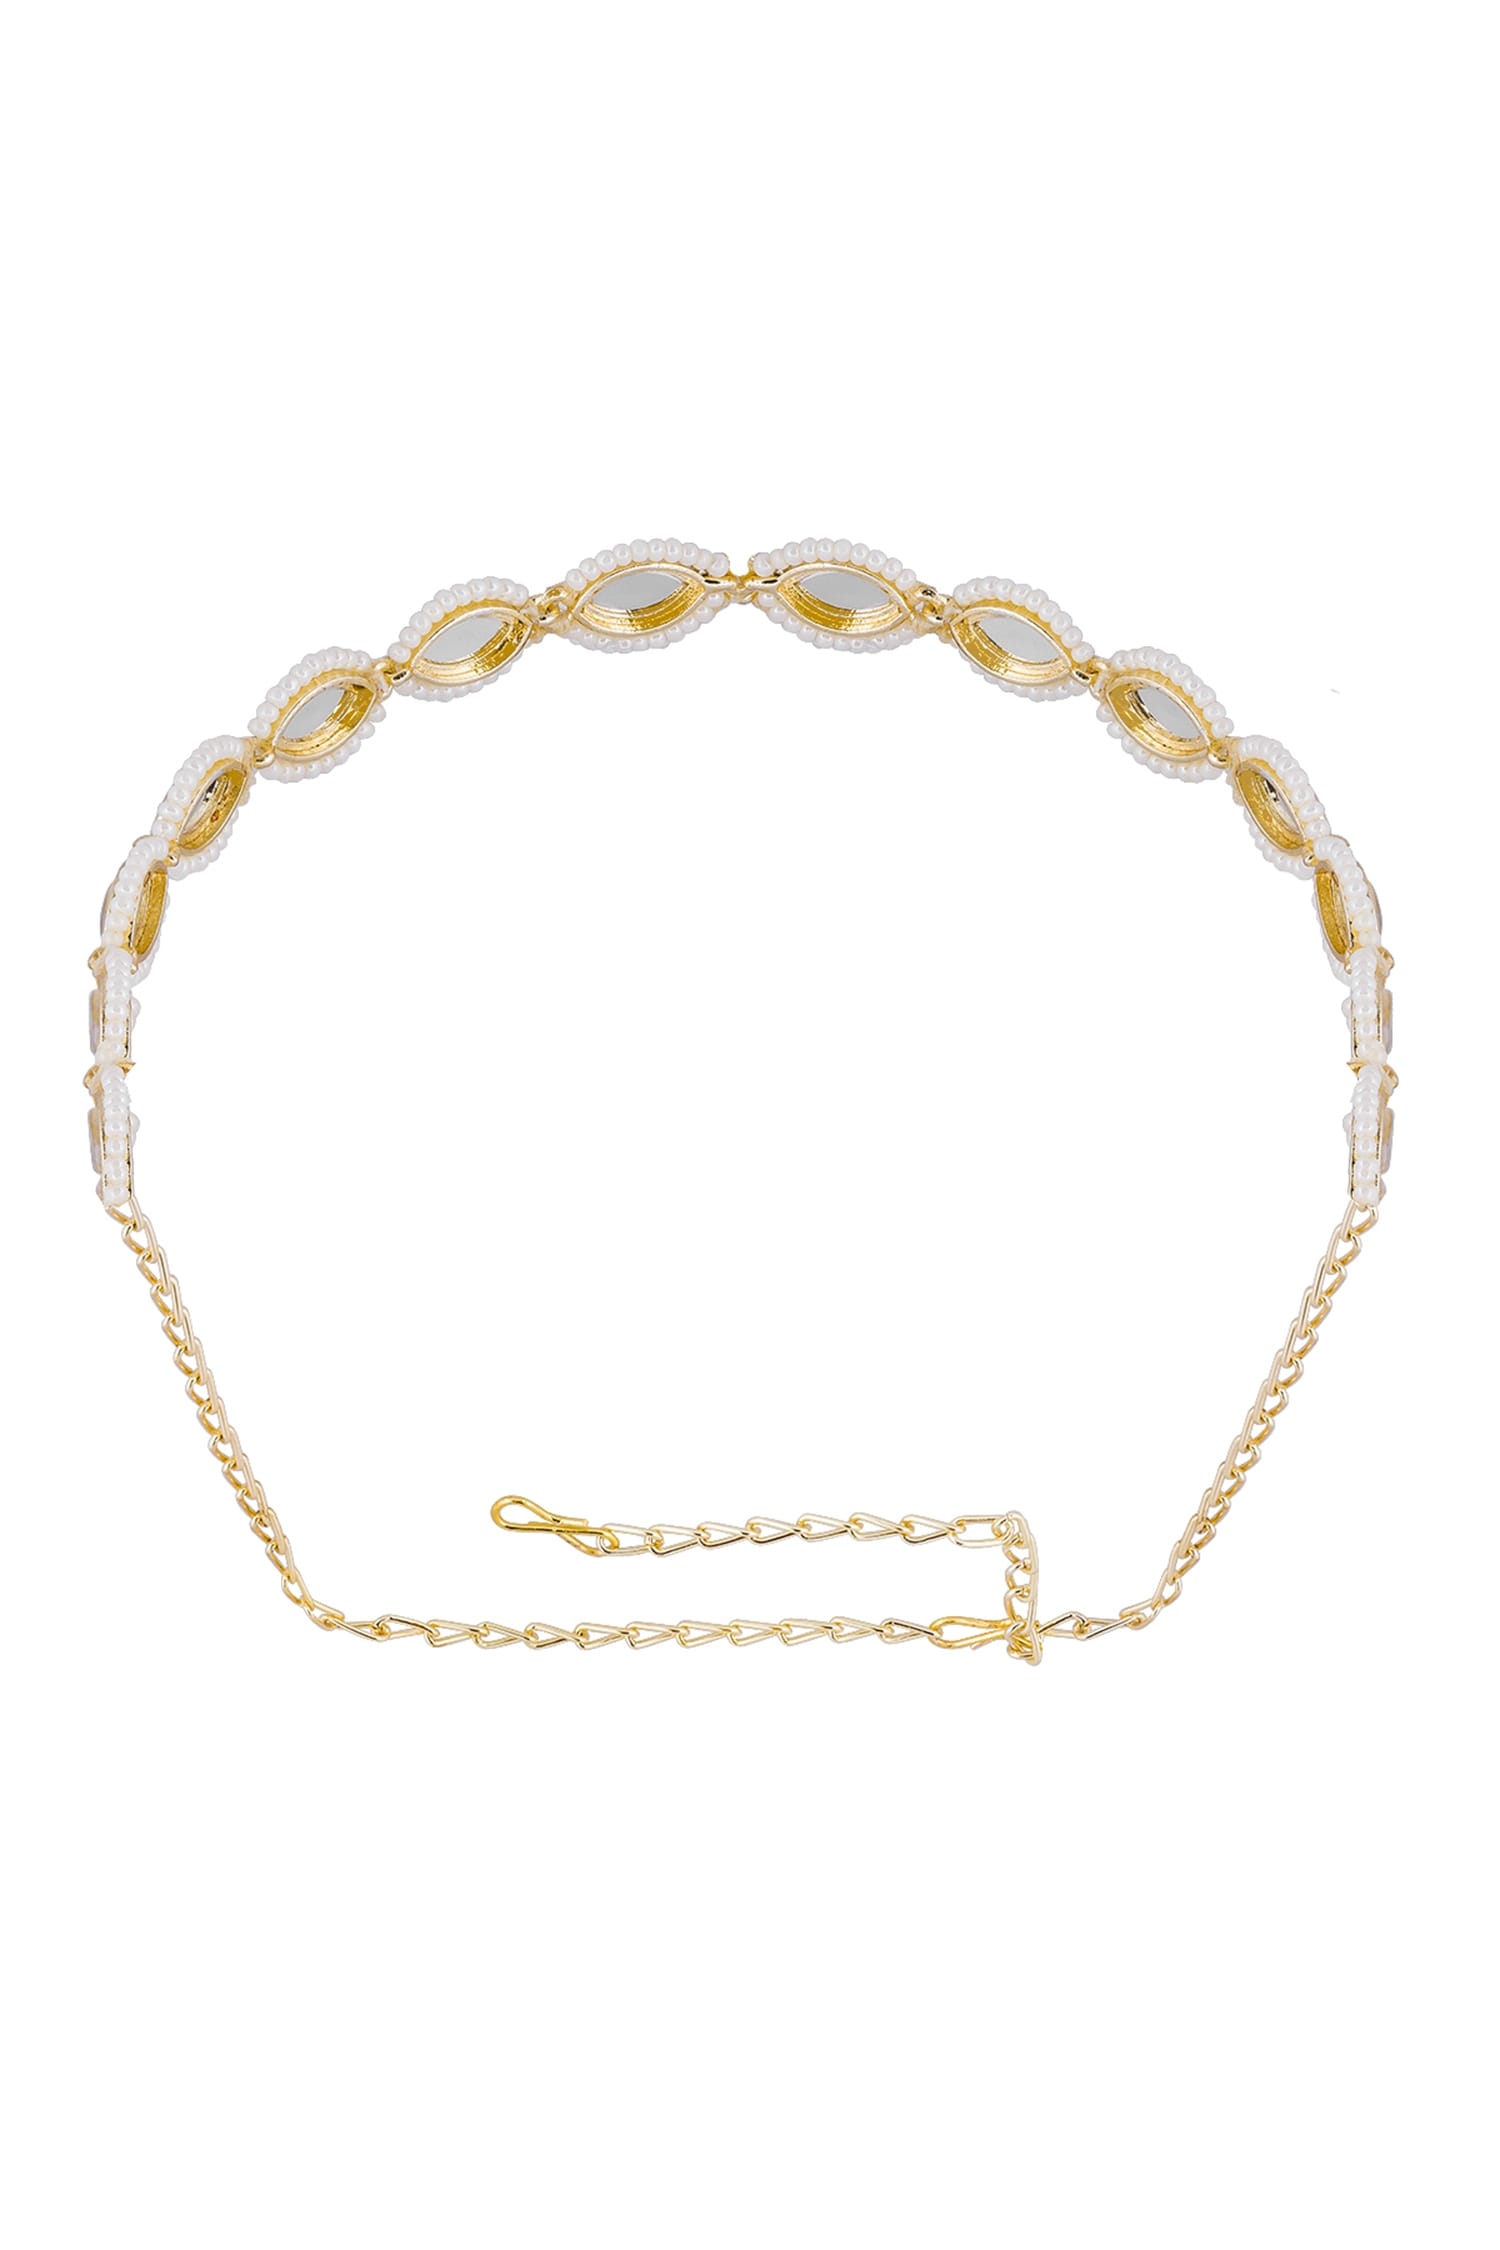 Hair Drama Co - Gold Embellished Floral Kundan Head Chain